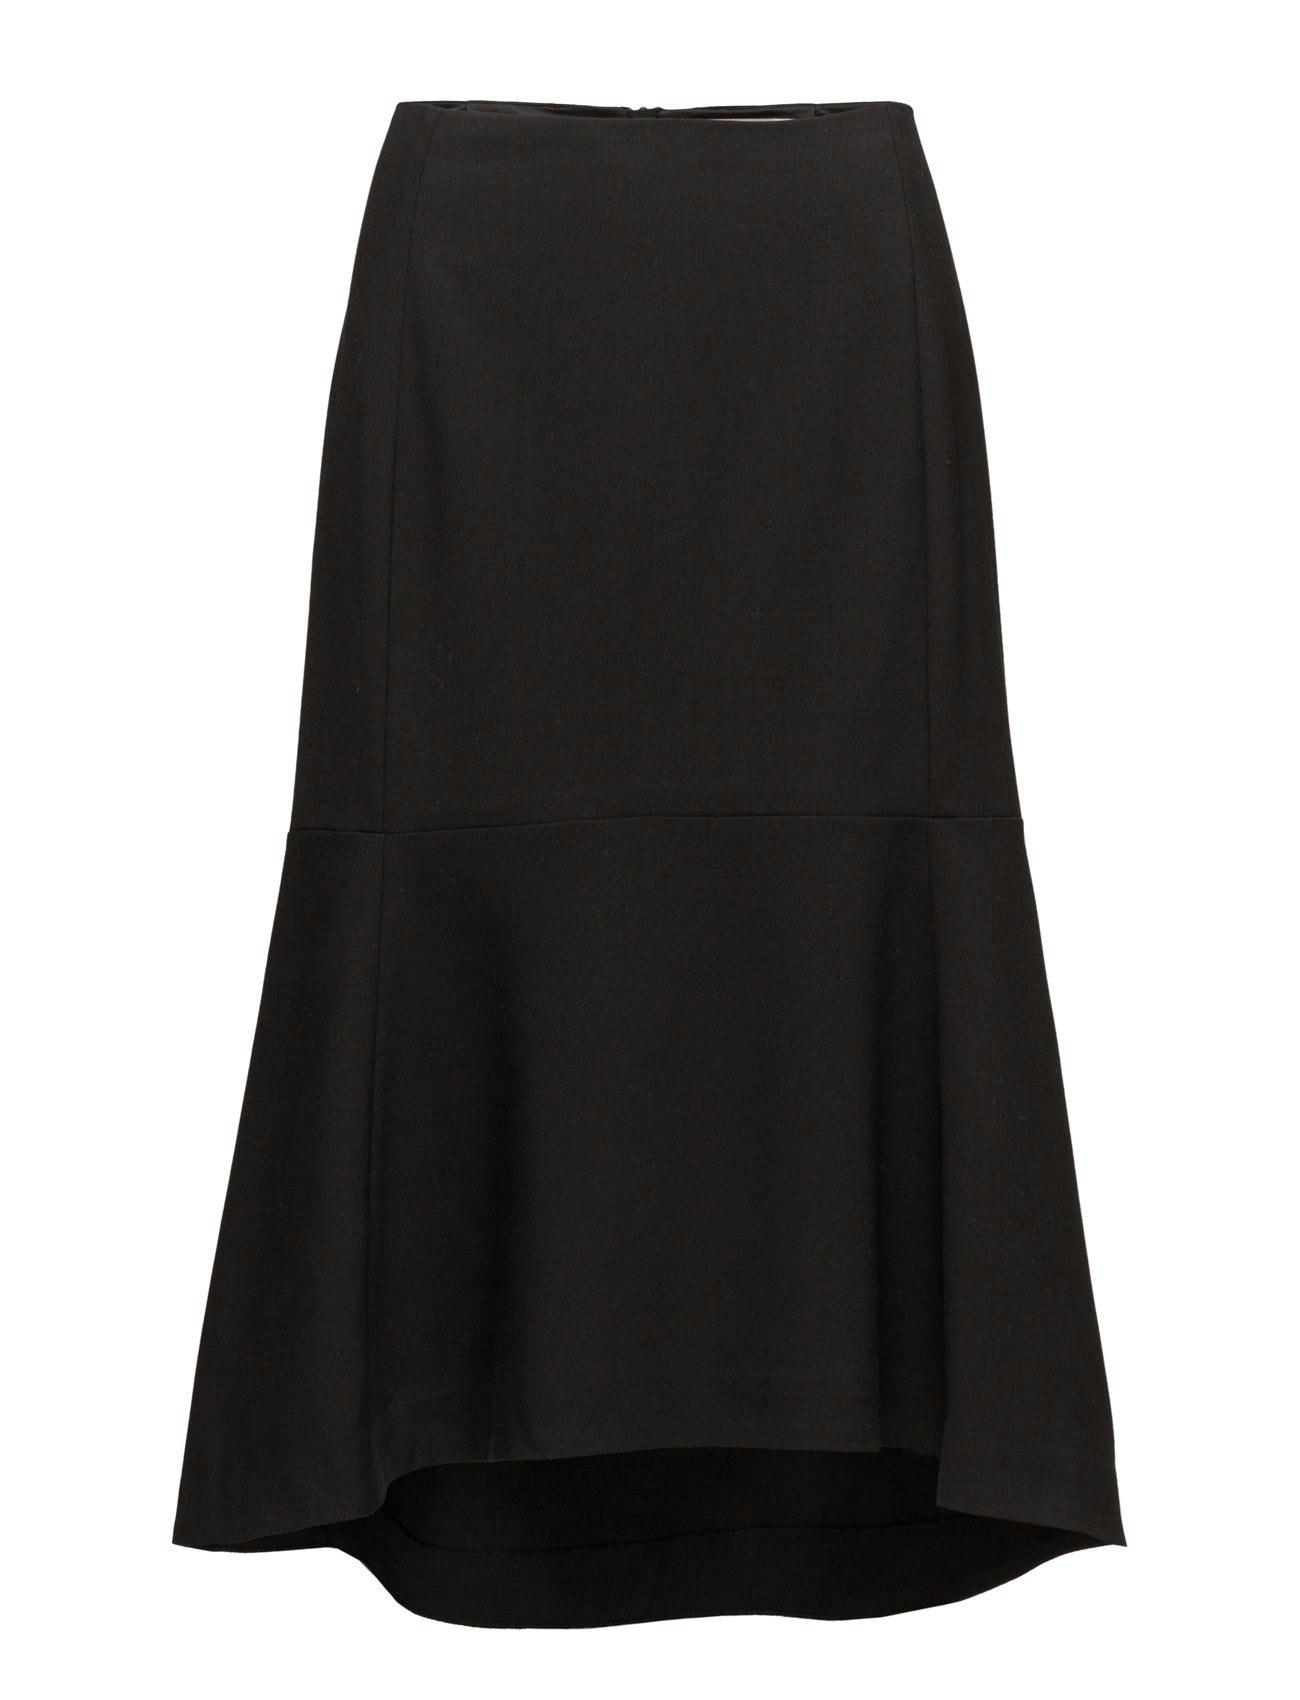 LeikaIW Skirt Black InWear